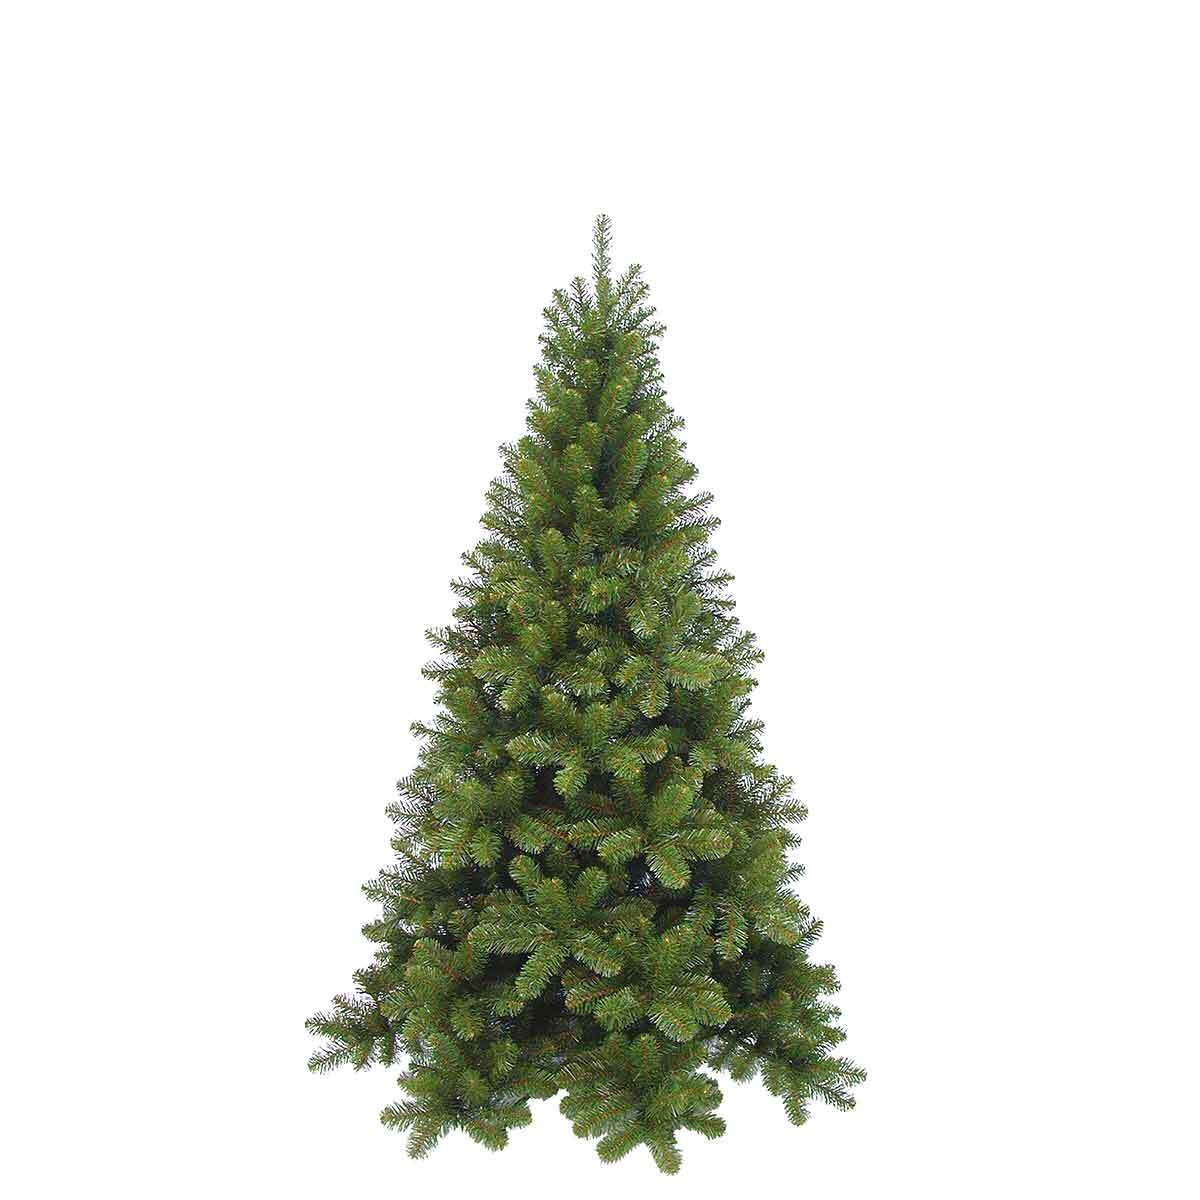 Triumph Tree kerstboom tuscan spruce maat in cm: 185 x 109 groen